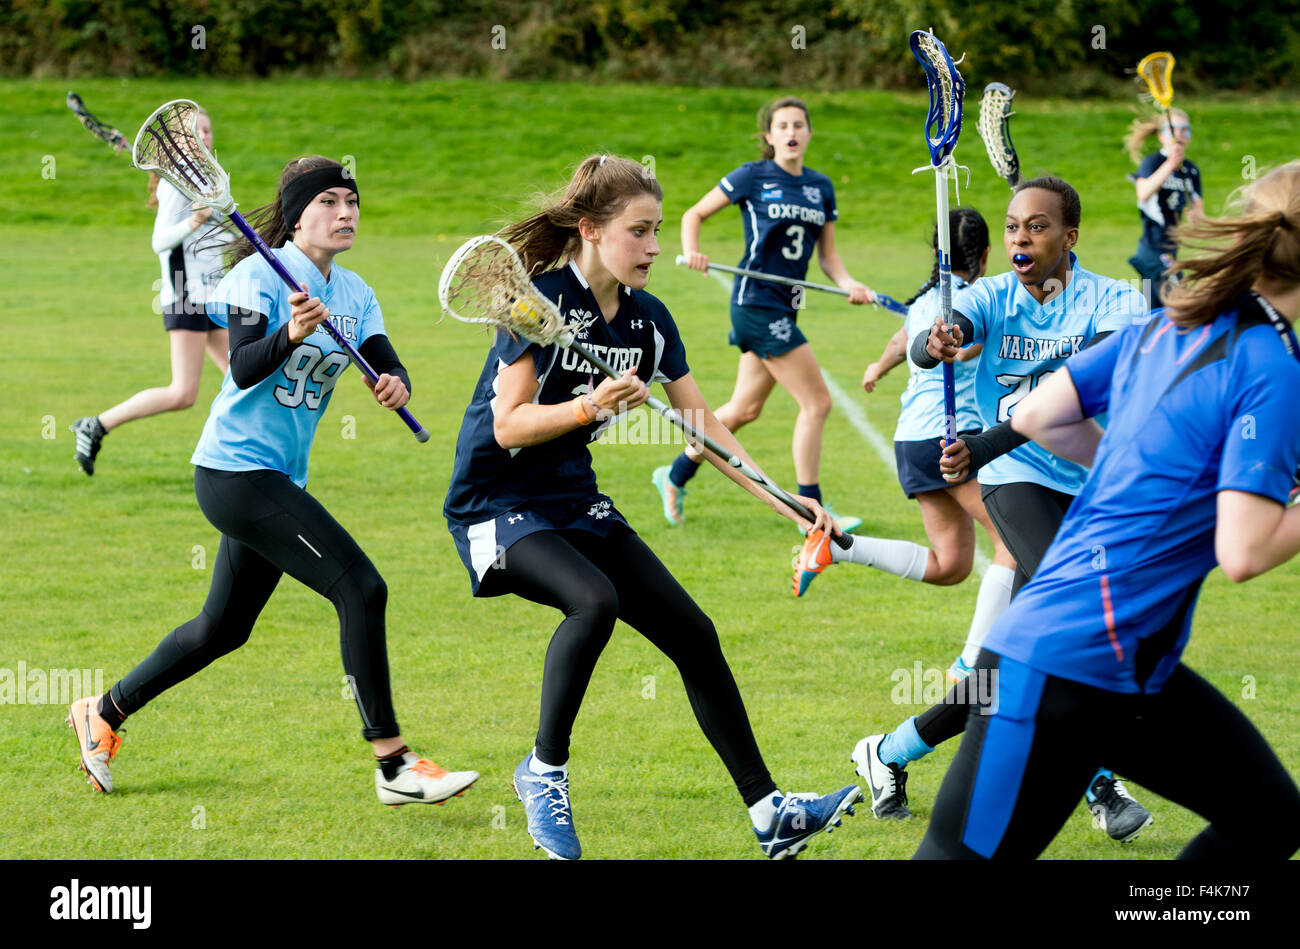 University sport - ladies lacrosse match at Warwick University, UK Stock Photo